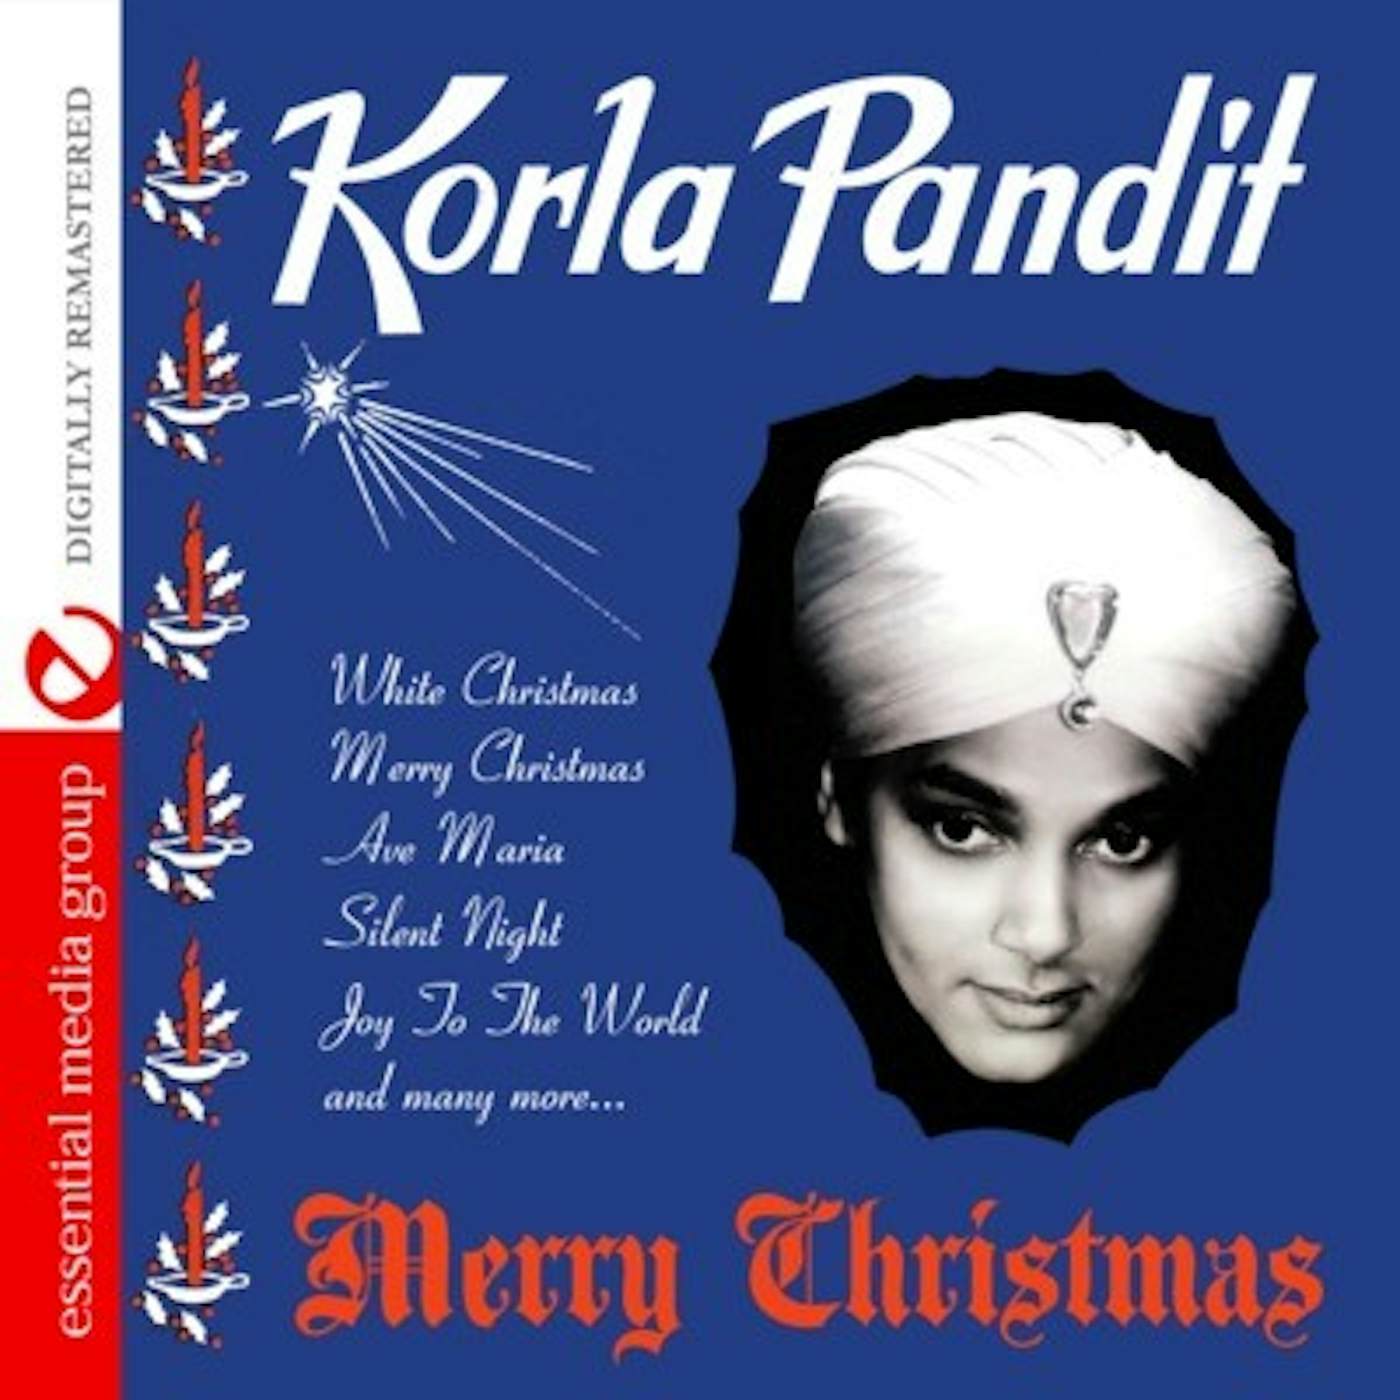 Korla Pandit MERRY CHRISTMAS CD